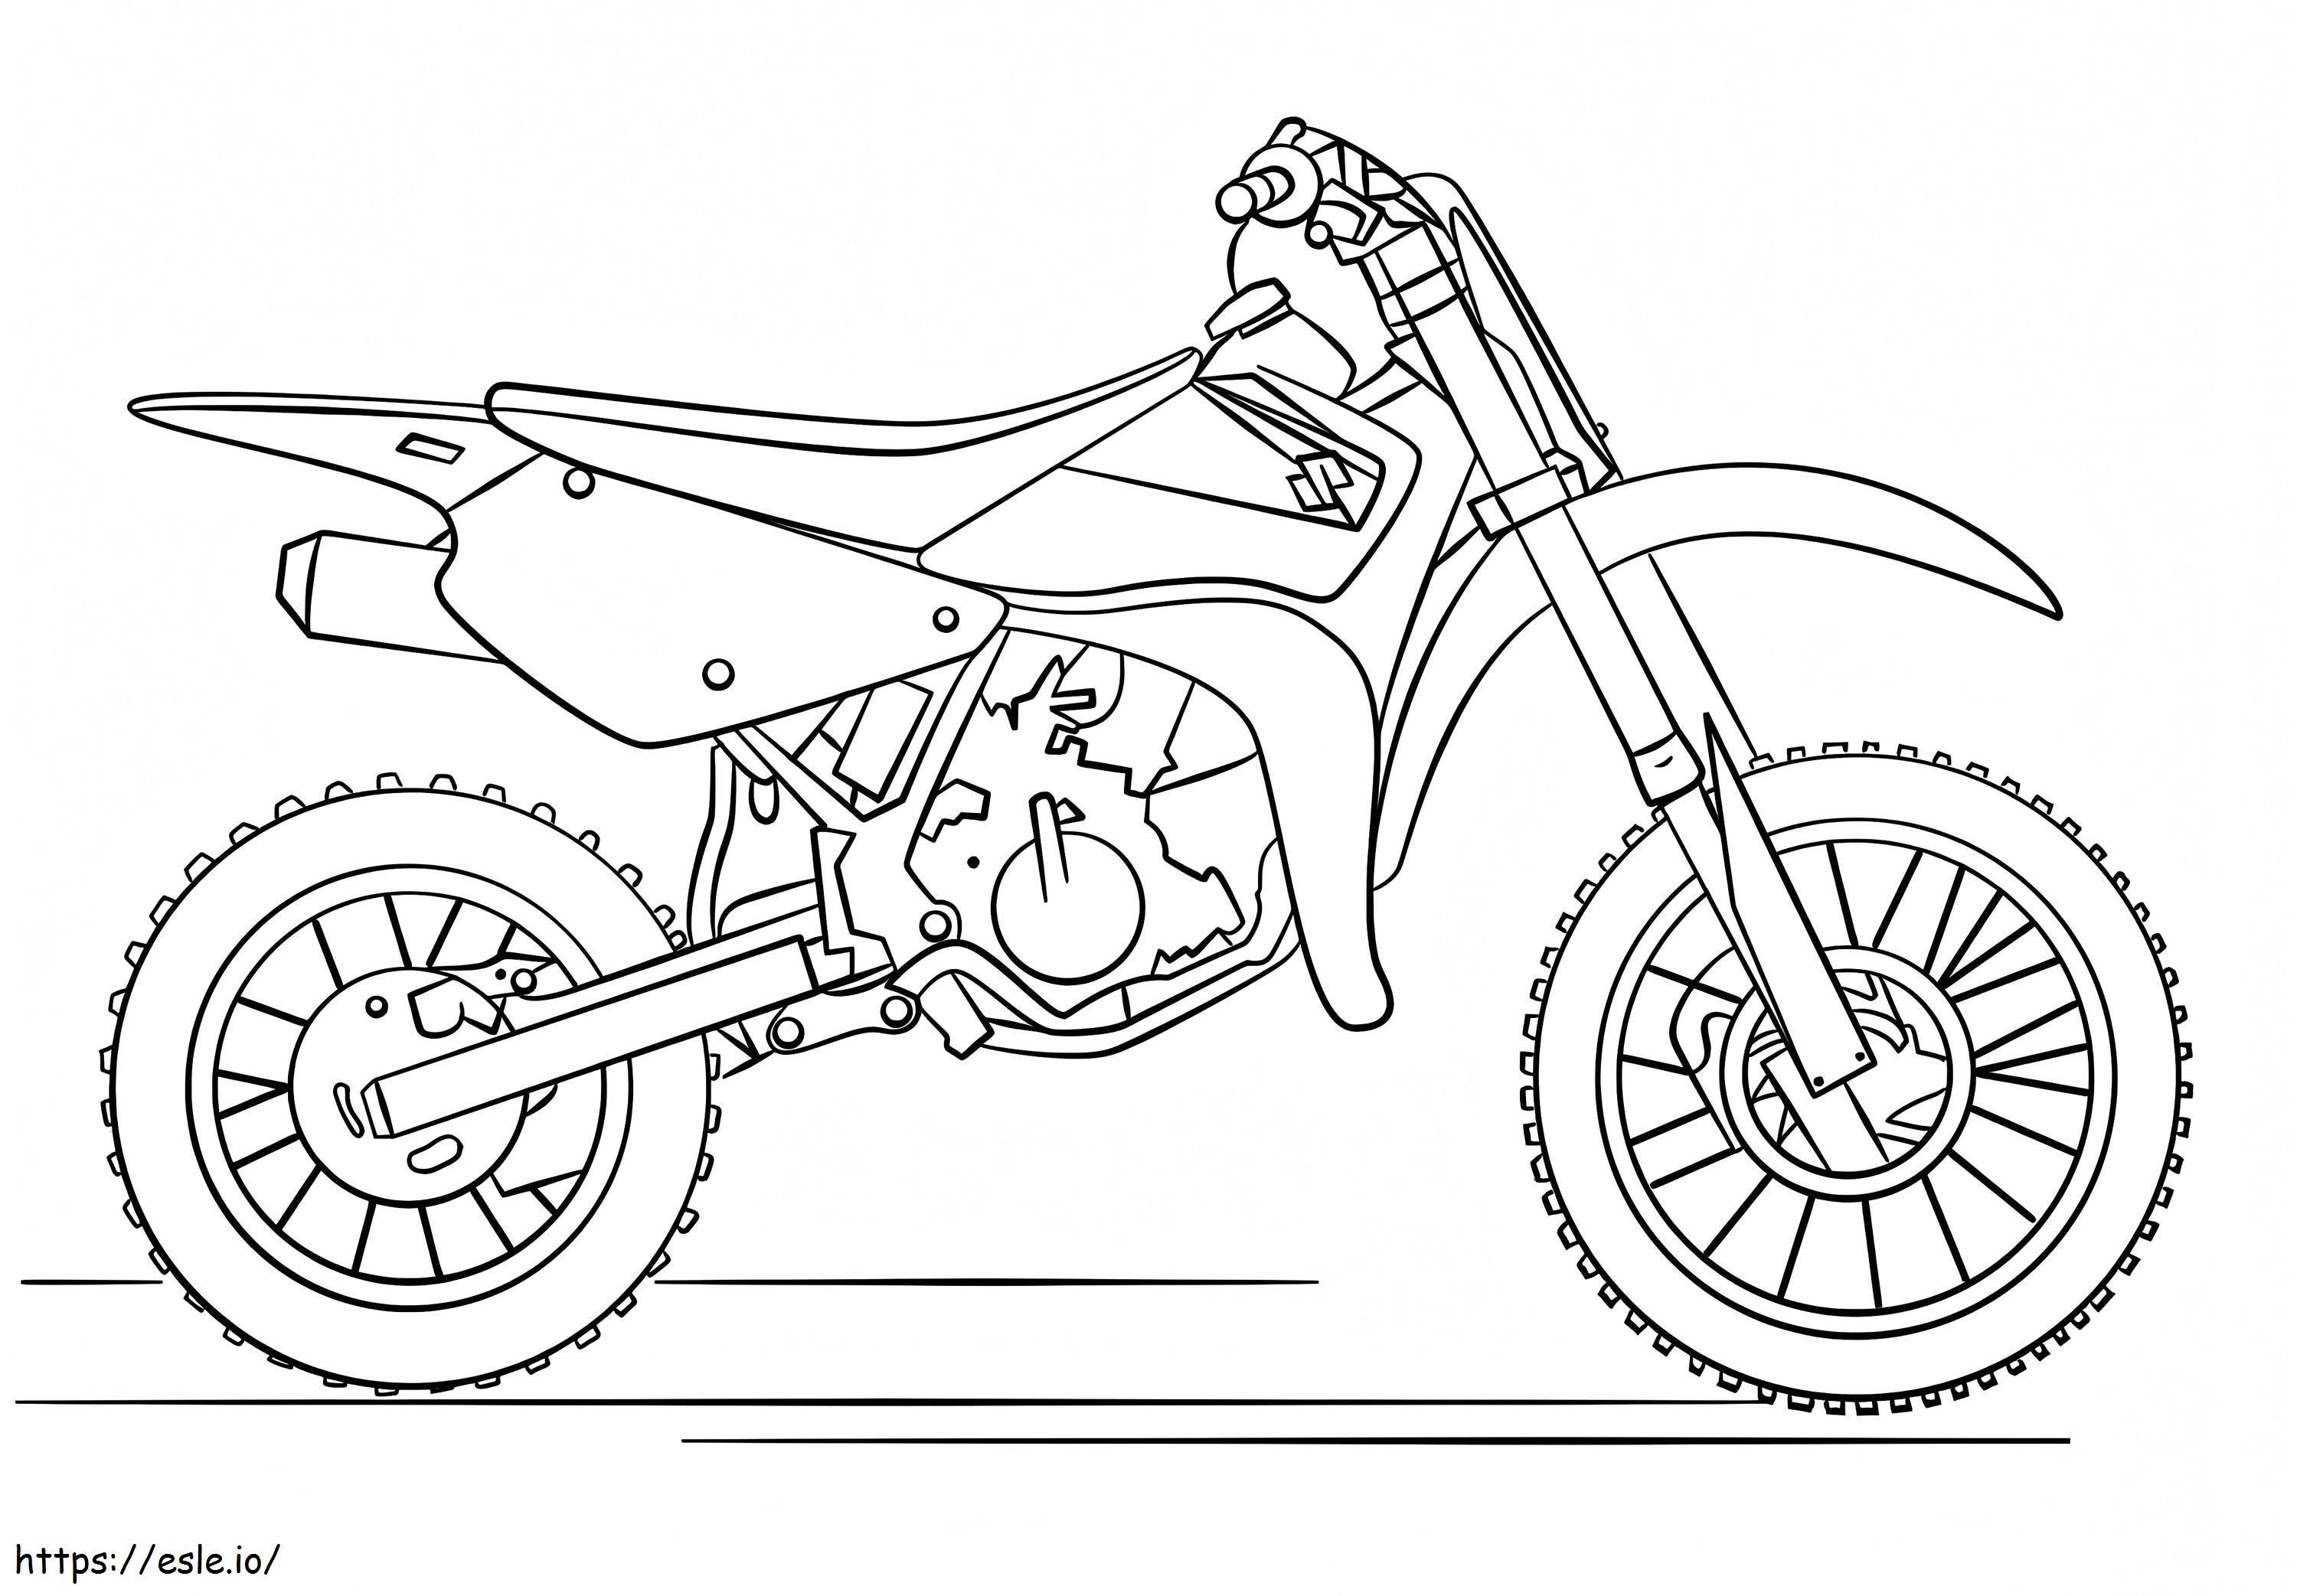 Coloriage Moto tout-terrain Suzuki à imprimer dessin